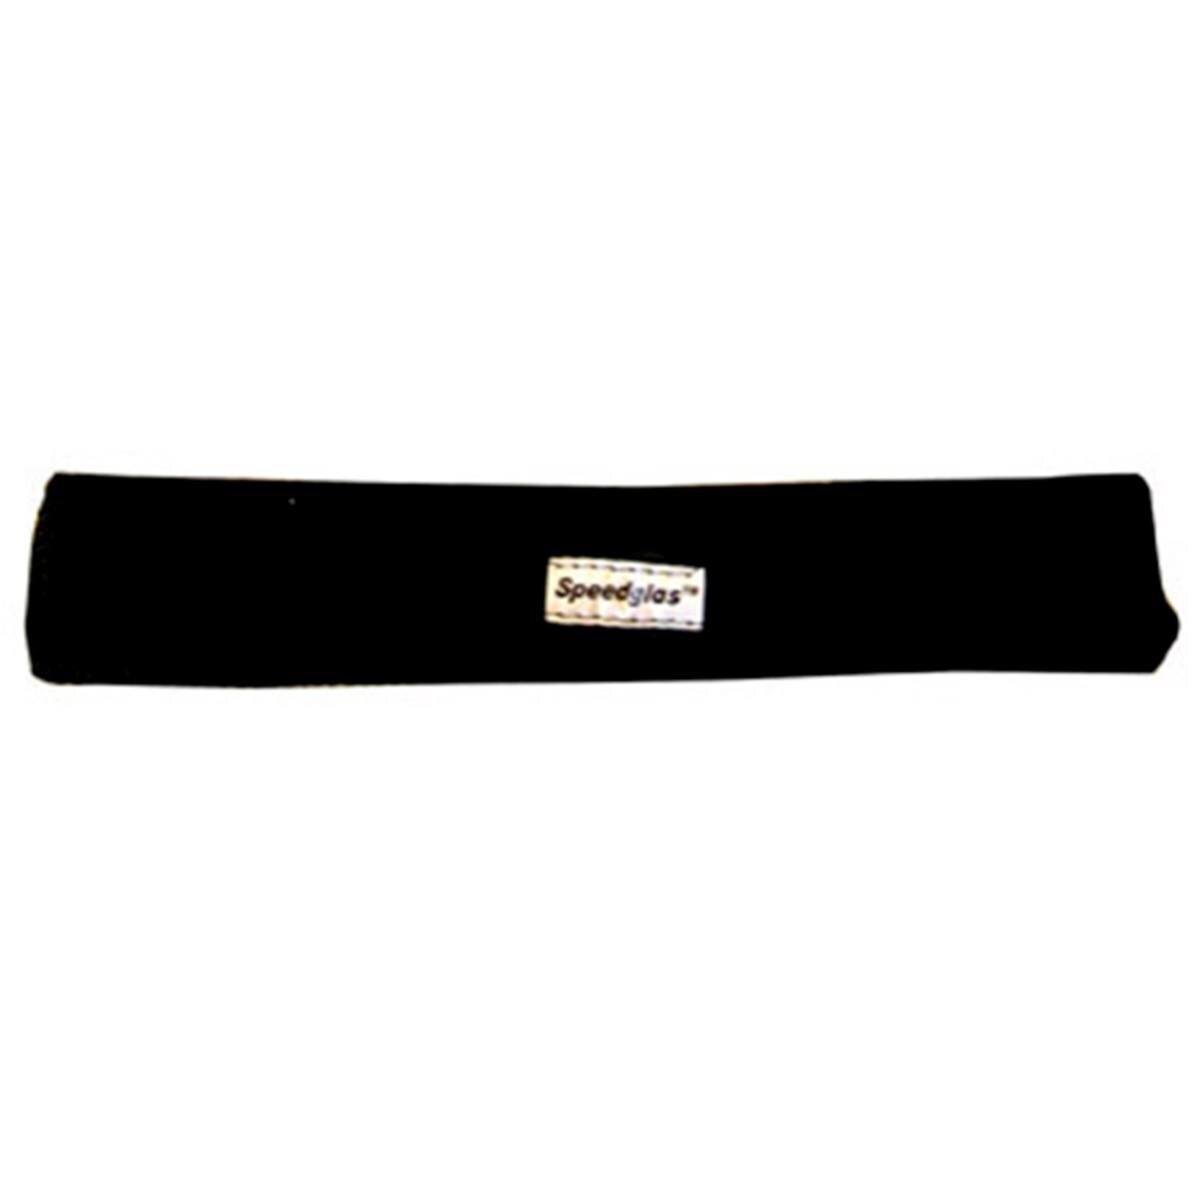 3M Speedglas Sweatband, soft cotton, small, pack of 2 #168012